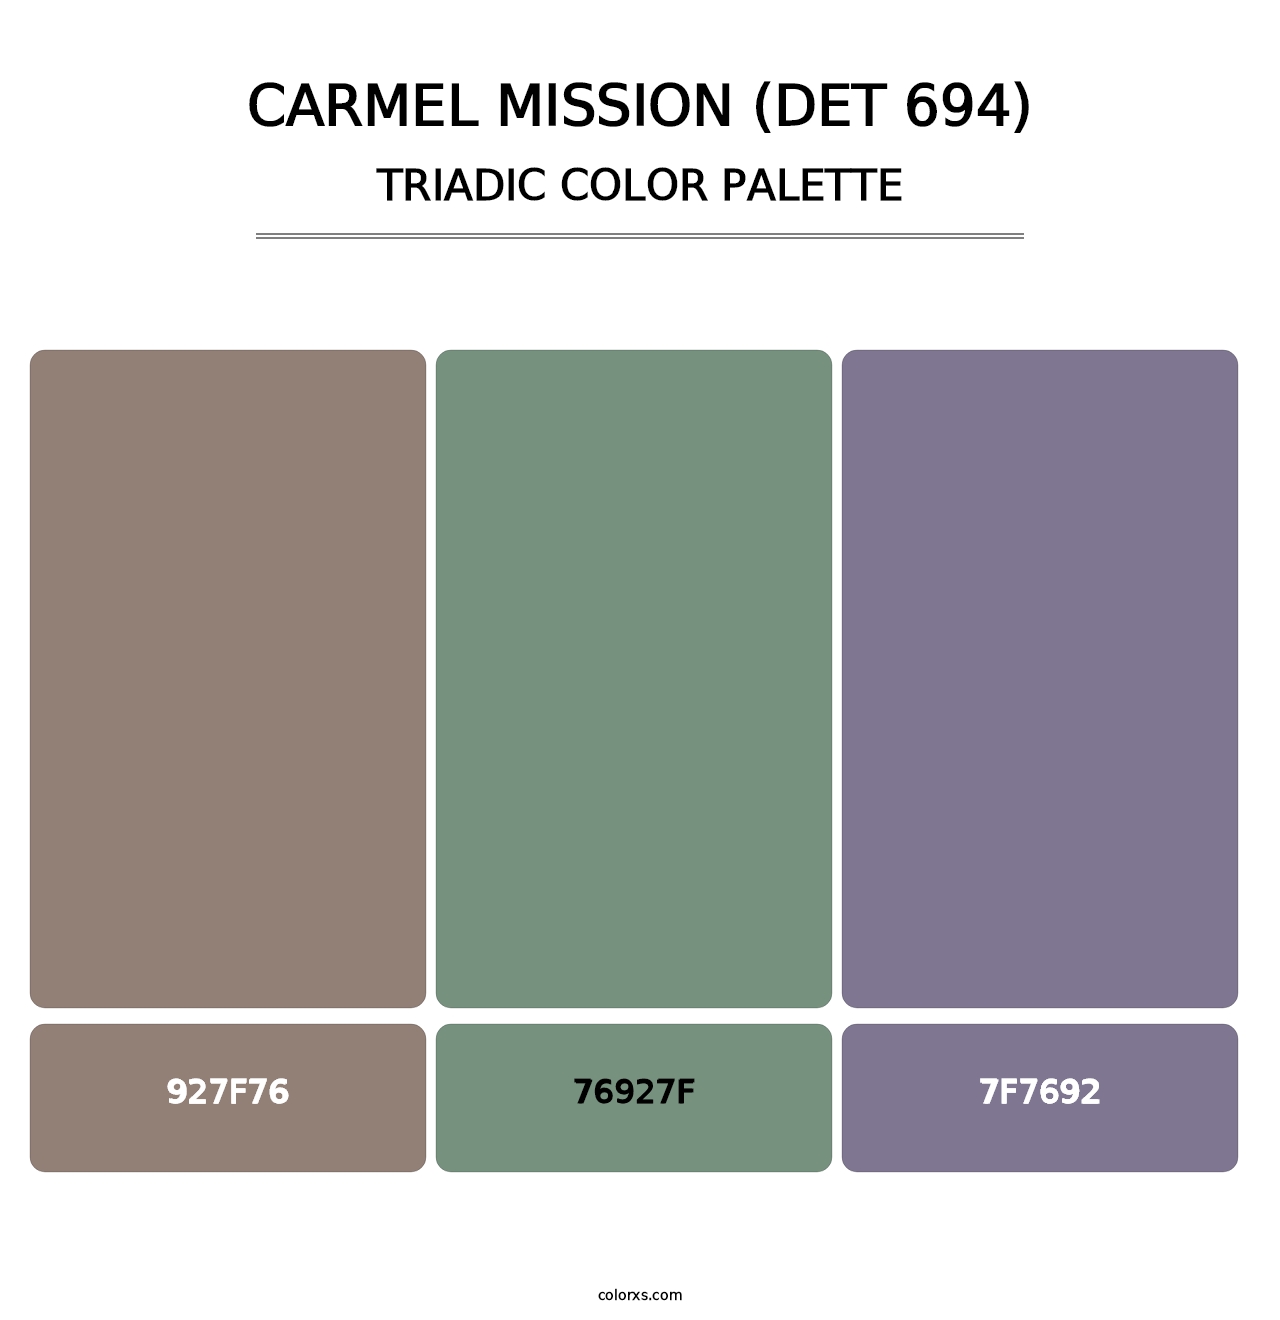 Carmel Mission (DET 694) - Triadic Color Palette